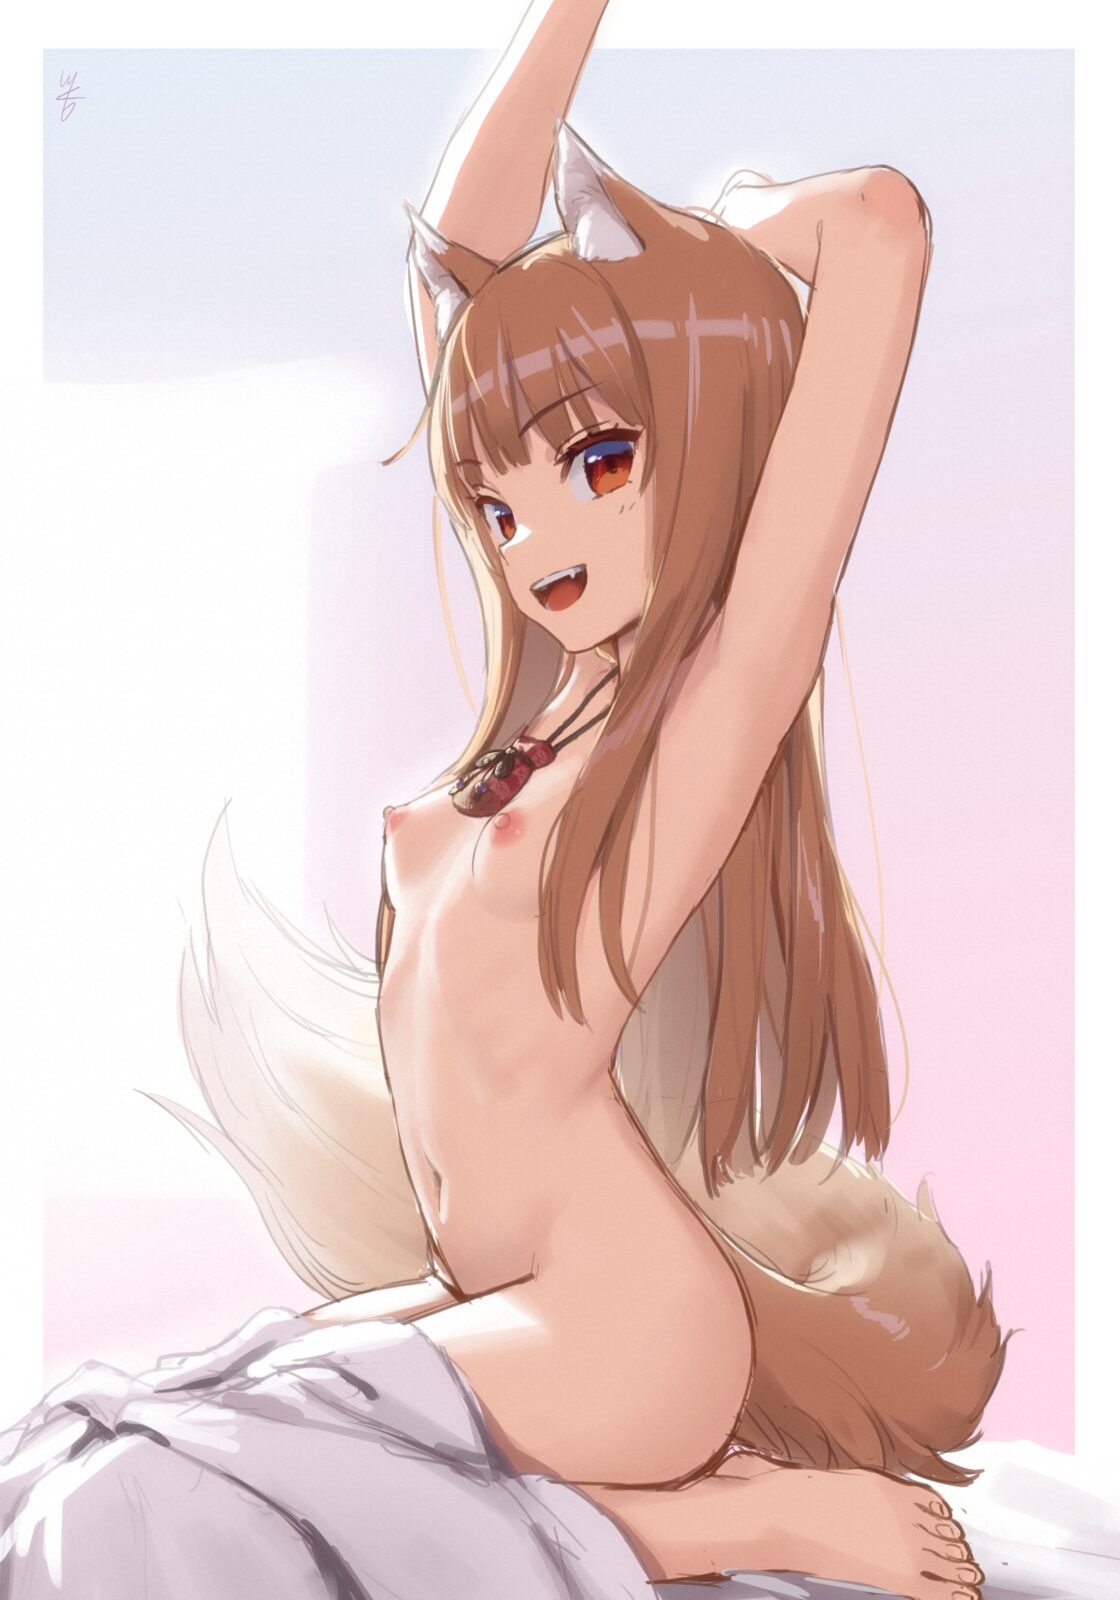 Holo wolf goddess (kawakami_rokkaku) [Spice and Wolf]